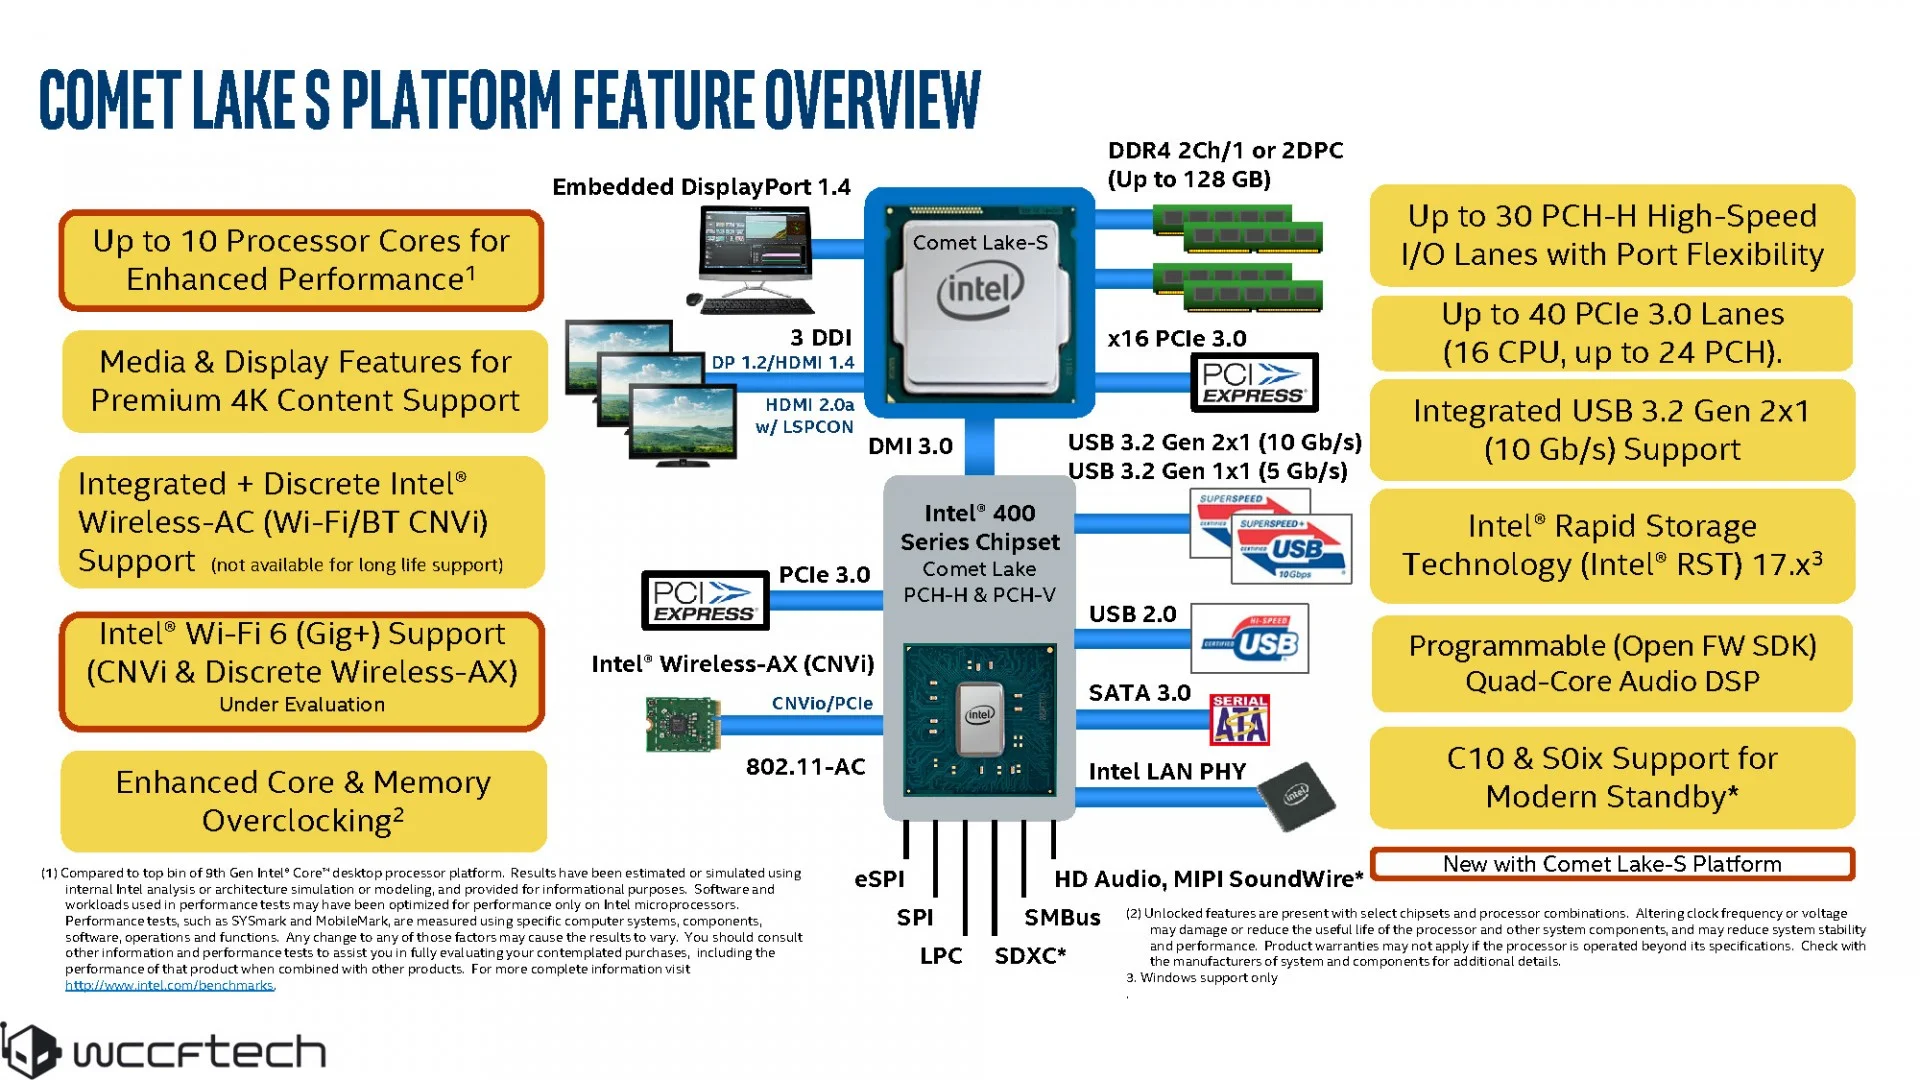 Процессор Intel Core i9-10900K с 10 ядрами и чипсет Z490 выйдут в апреле 2020 года - фото 1